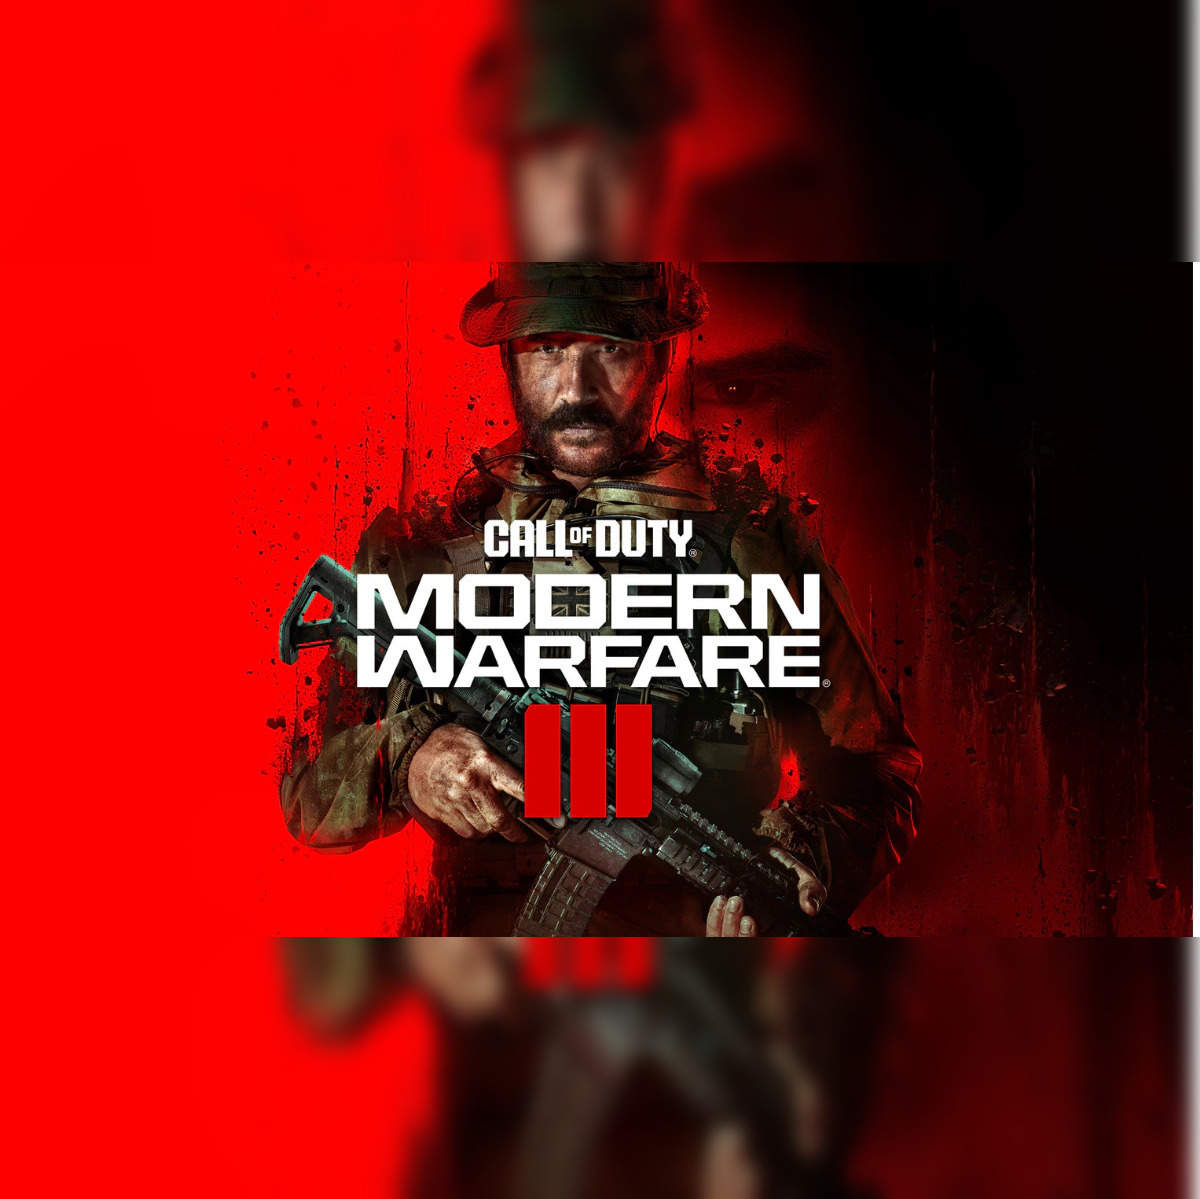 COD Modern Warfare 3 System Requirements